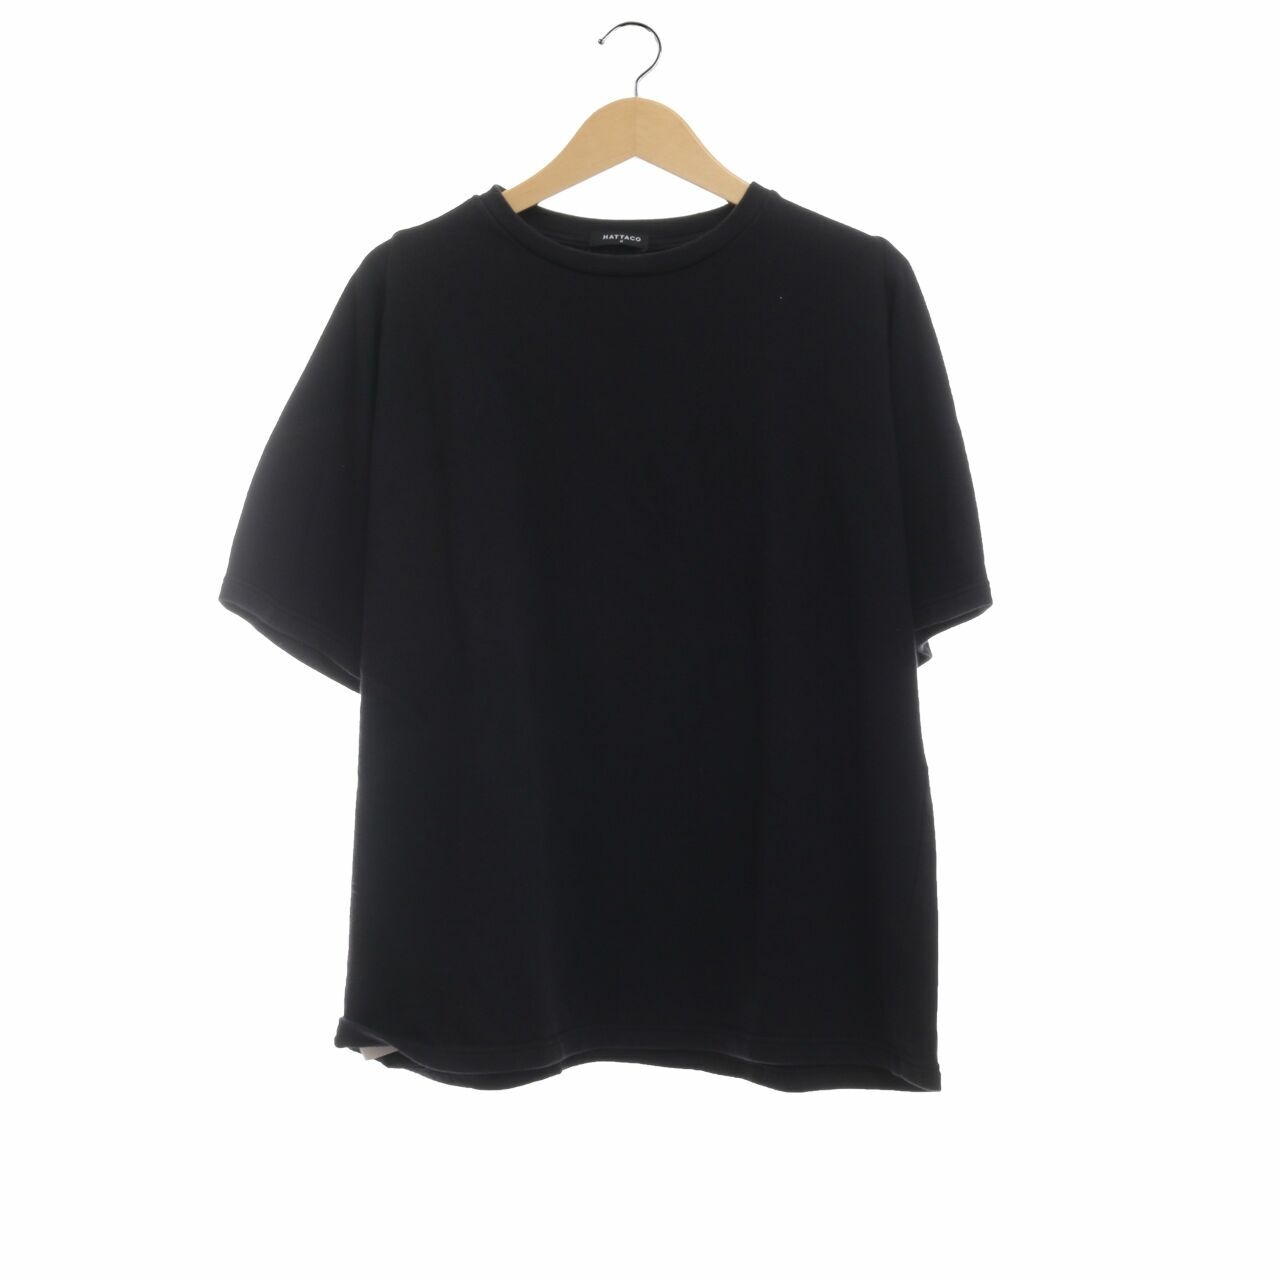 Hattaco Black T-Shirt